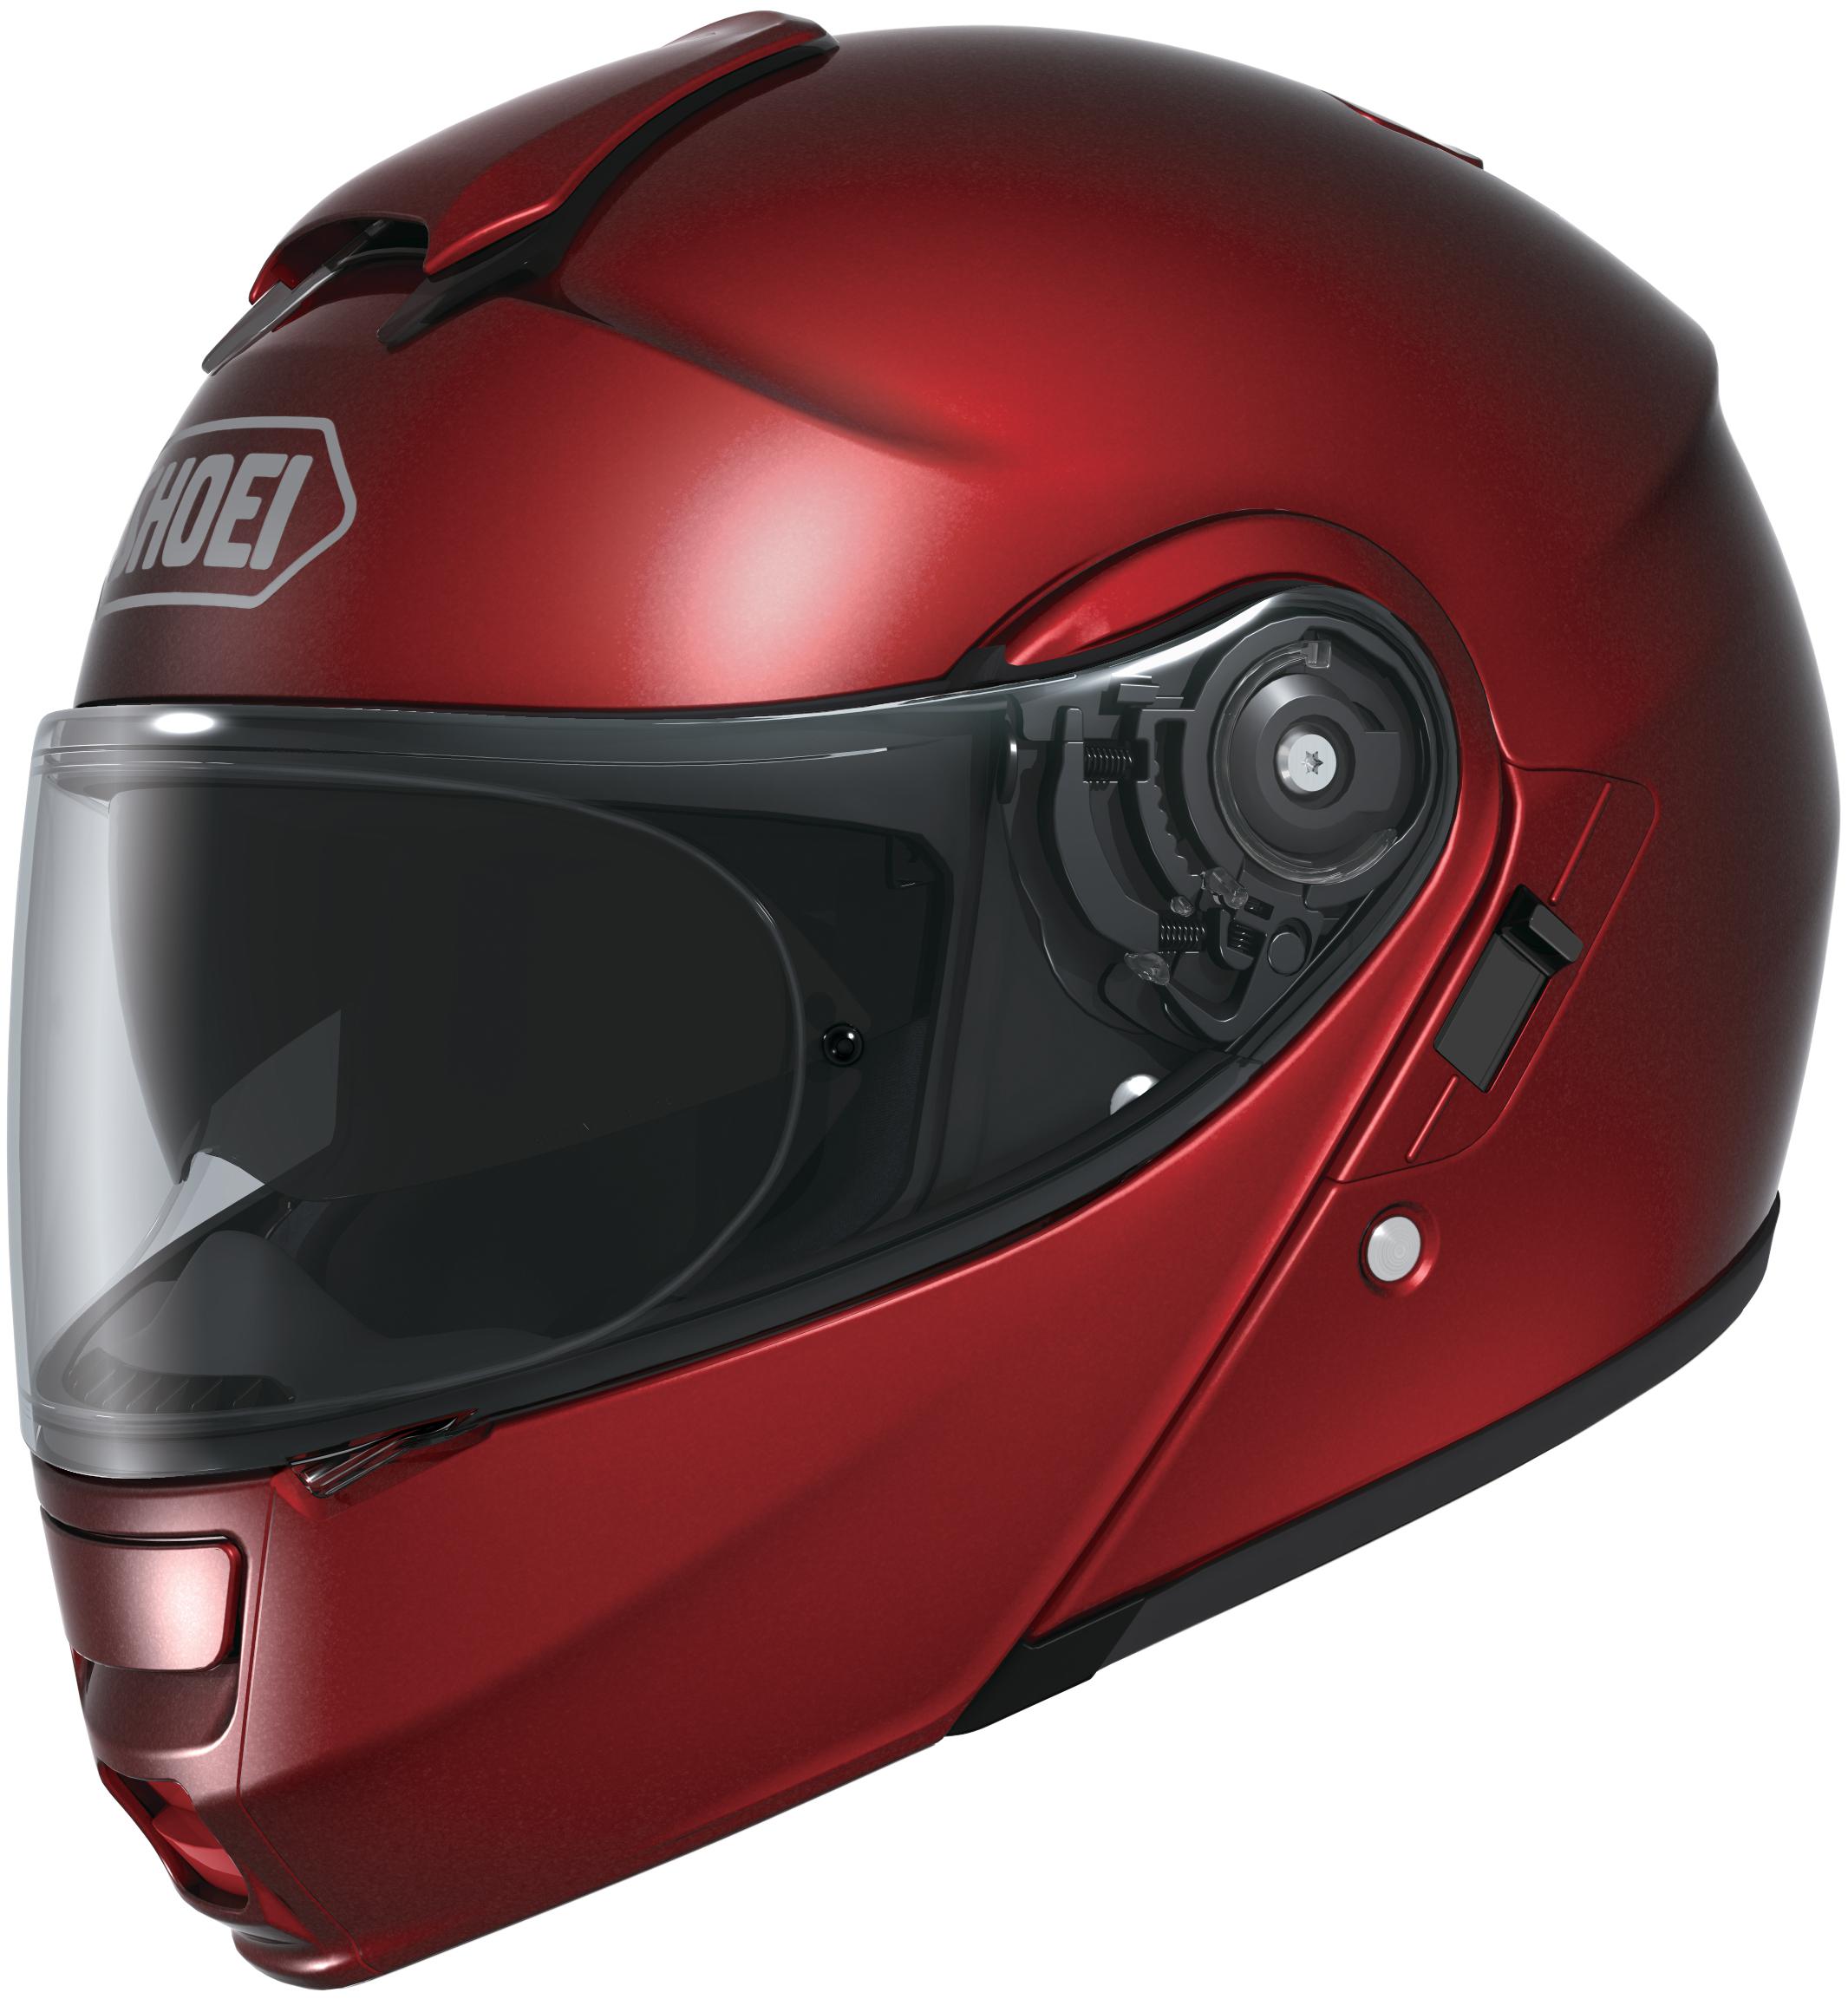 Free 2-day shipping! shoei neotec wine modular helmet 2013 motorcycle full face